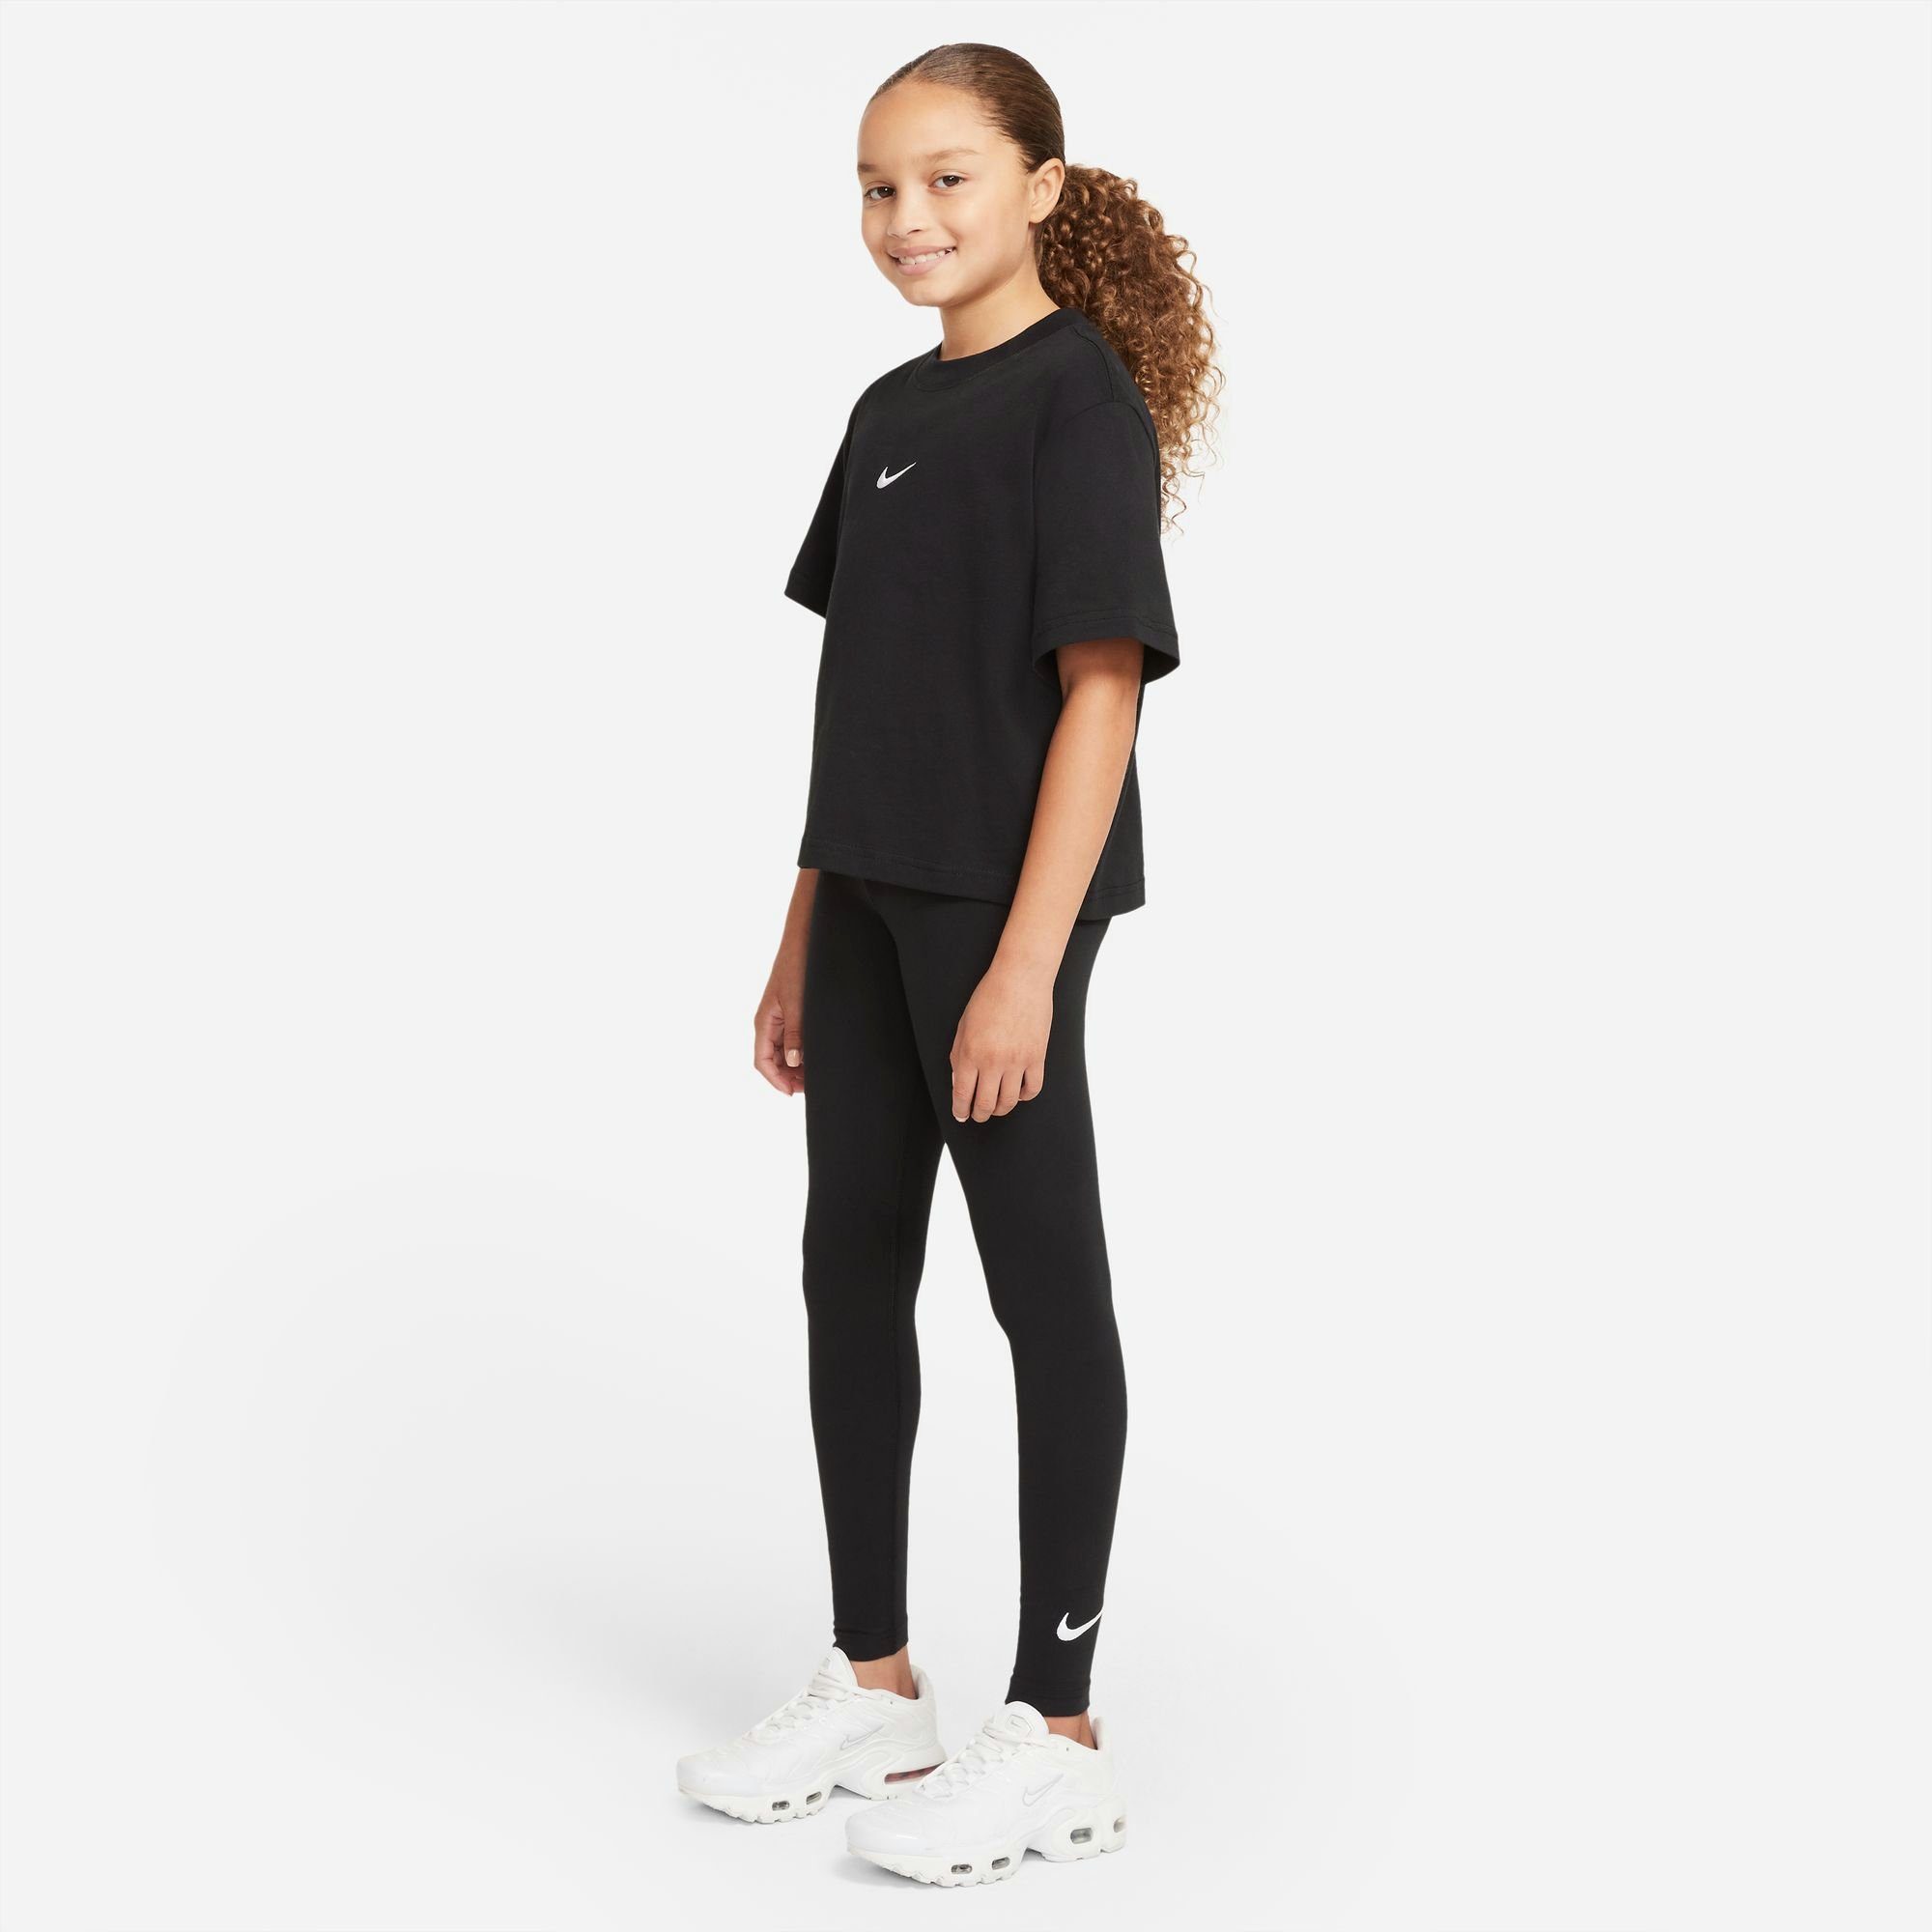 KIDS' Leggings Sportswear FAVORITES Nike (GIRLS) für SWOOSH Kinder BIG LEGGINGS -